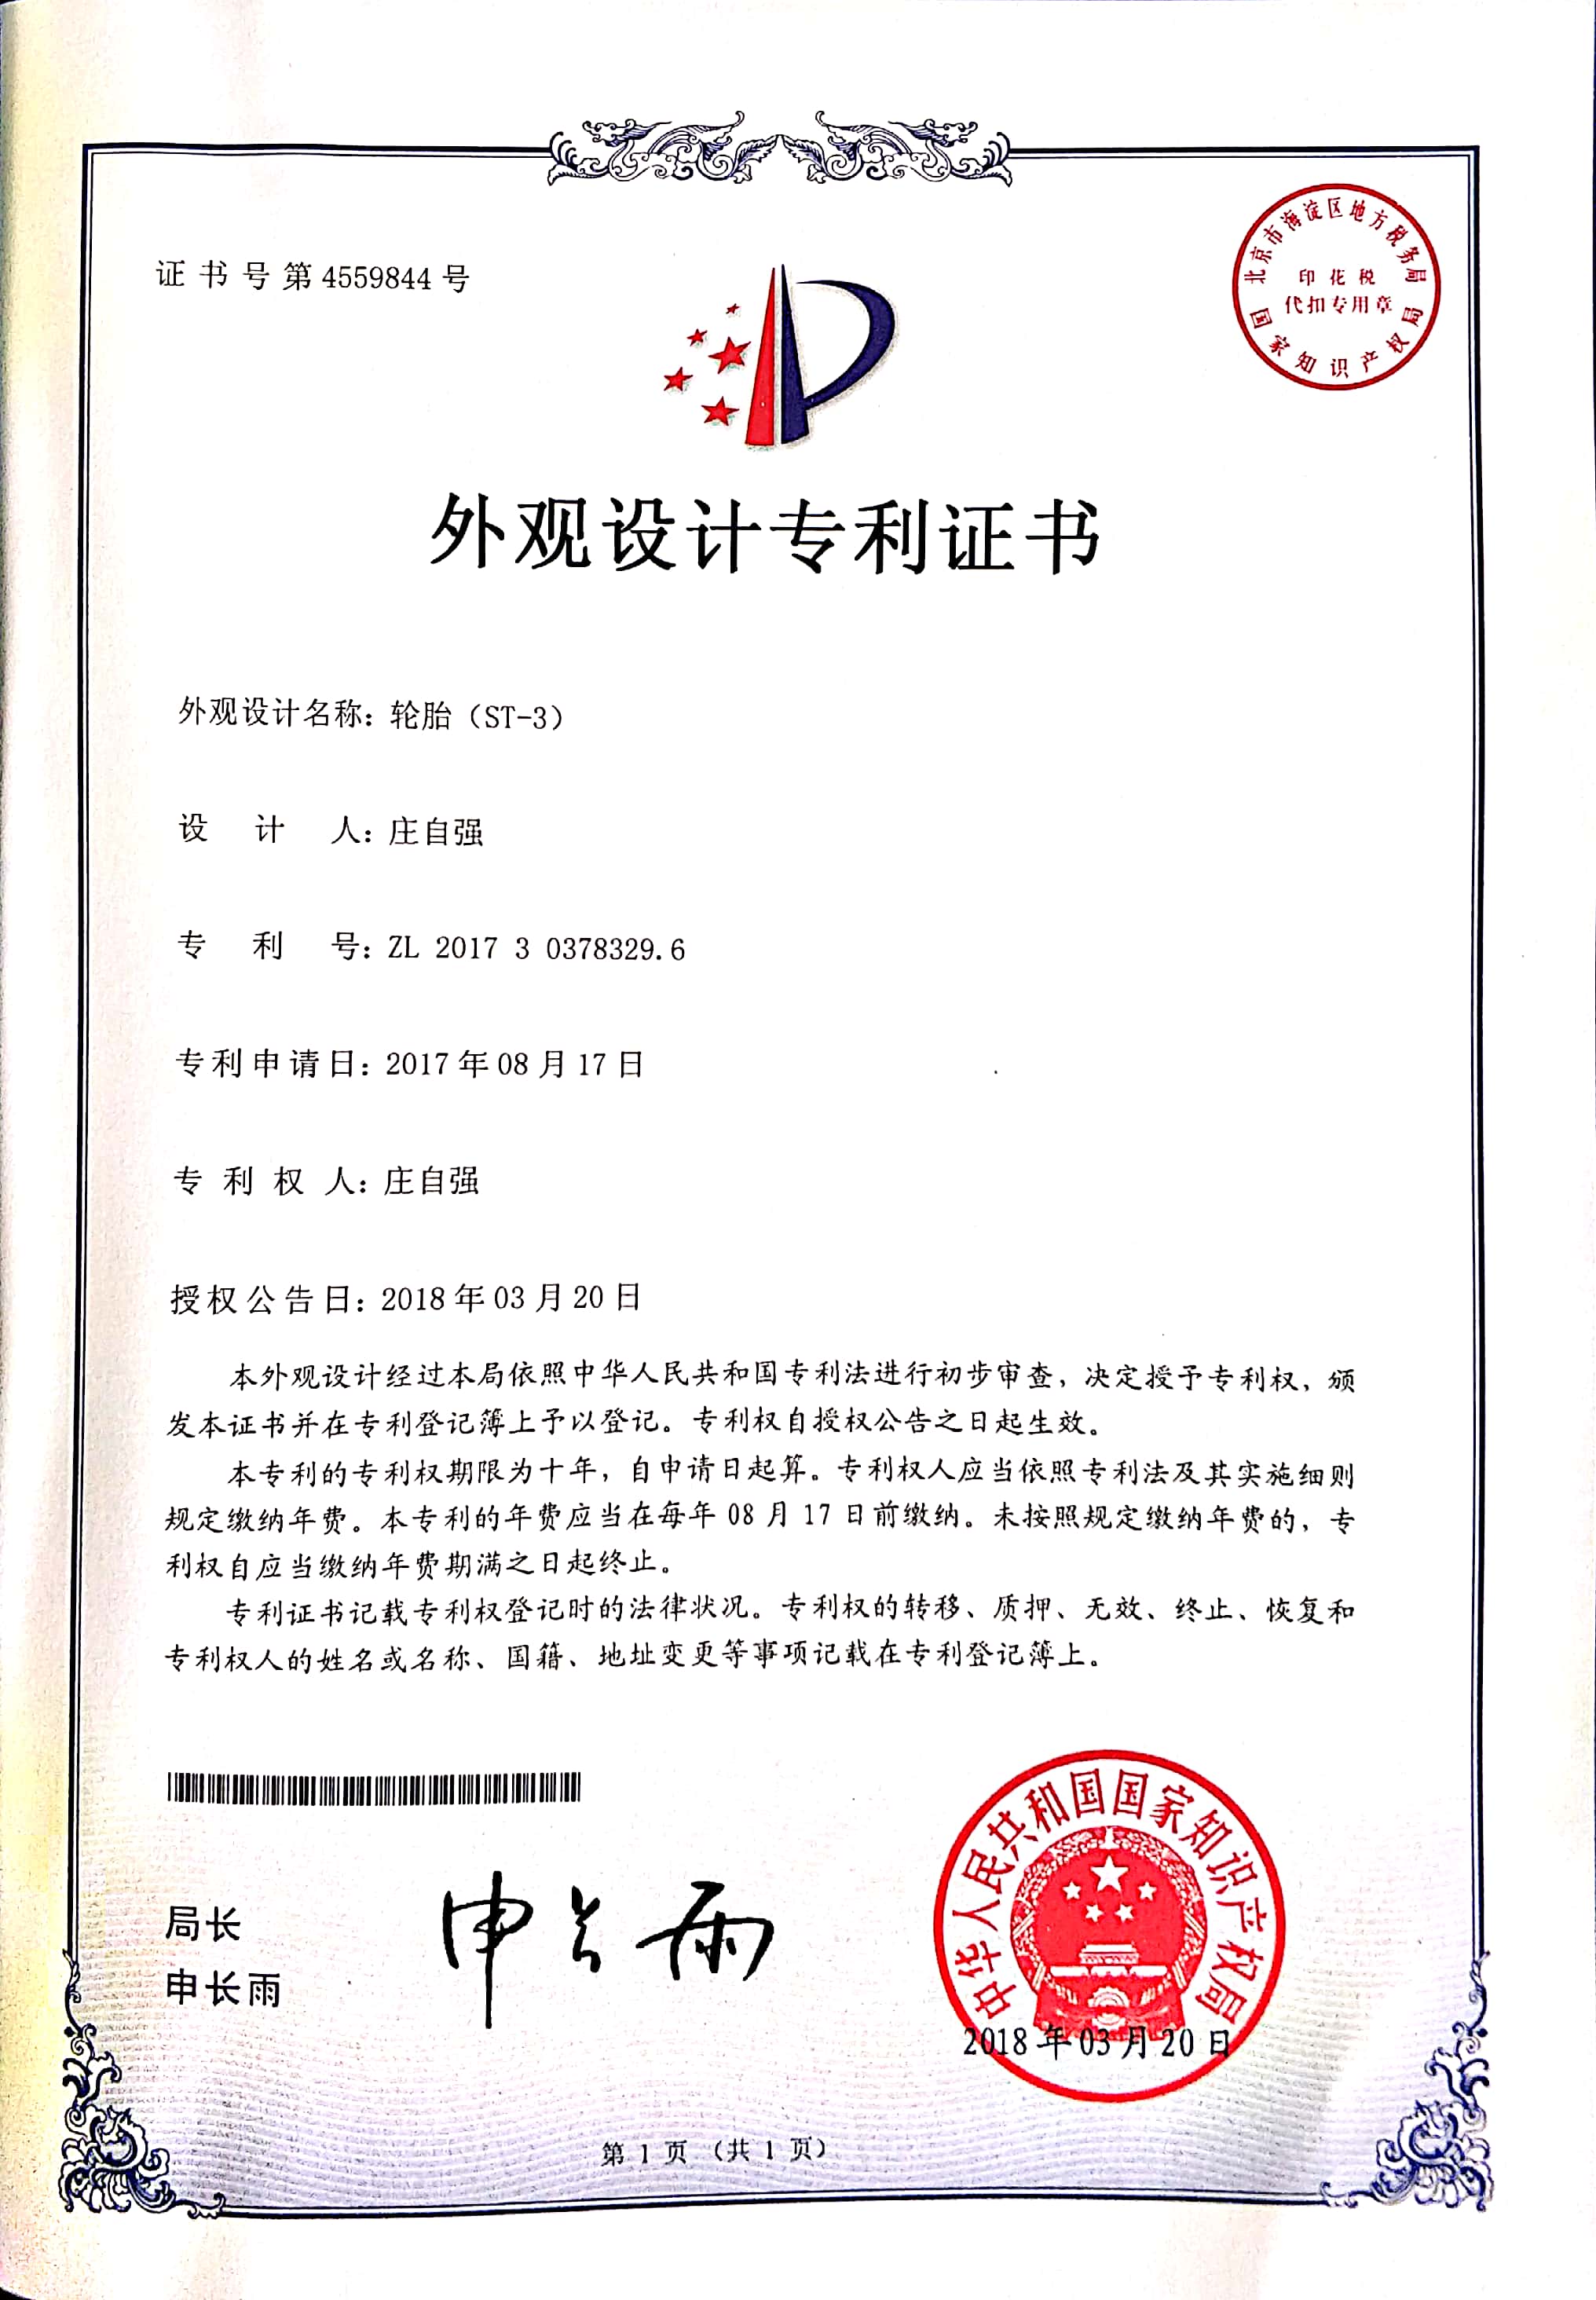 Certificate of design patent